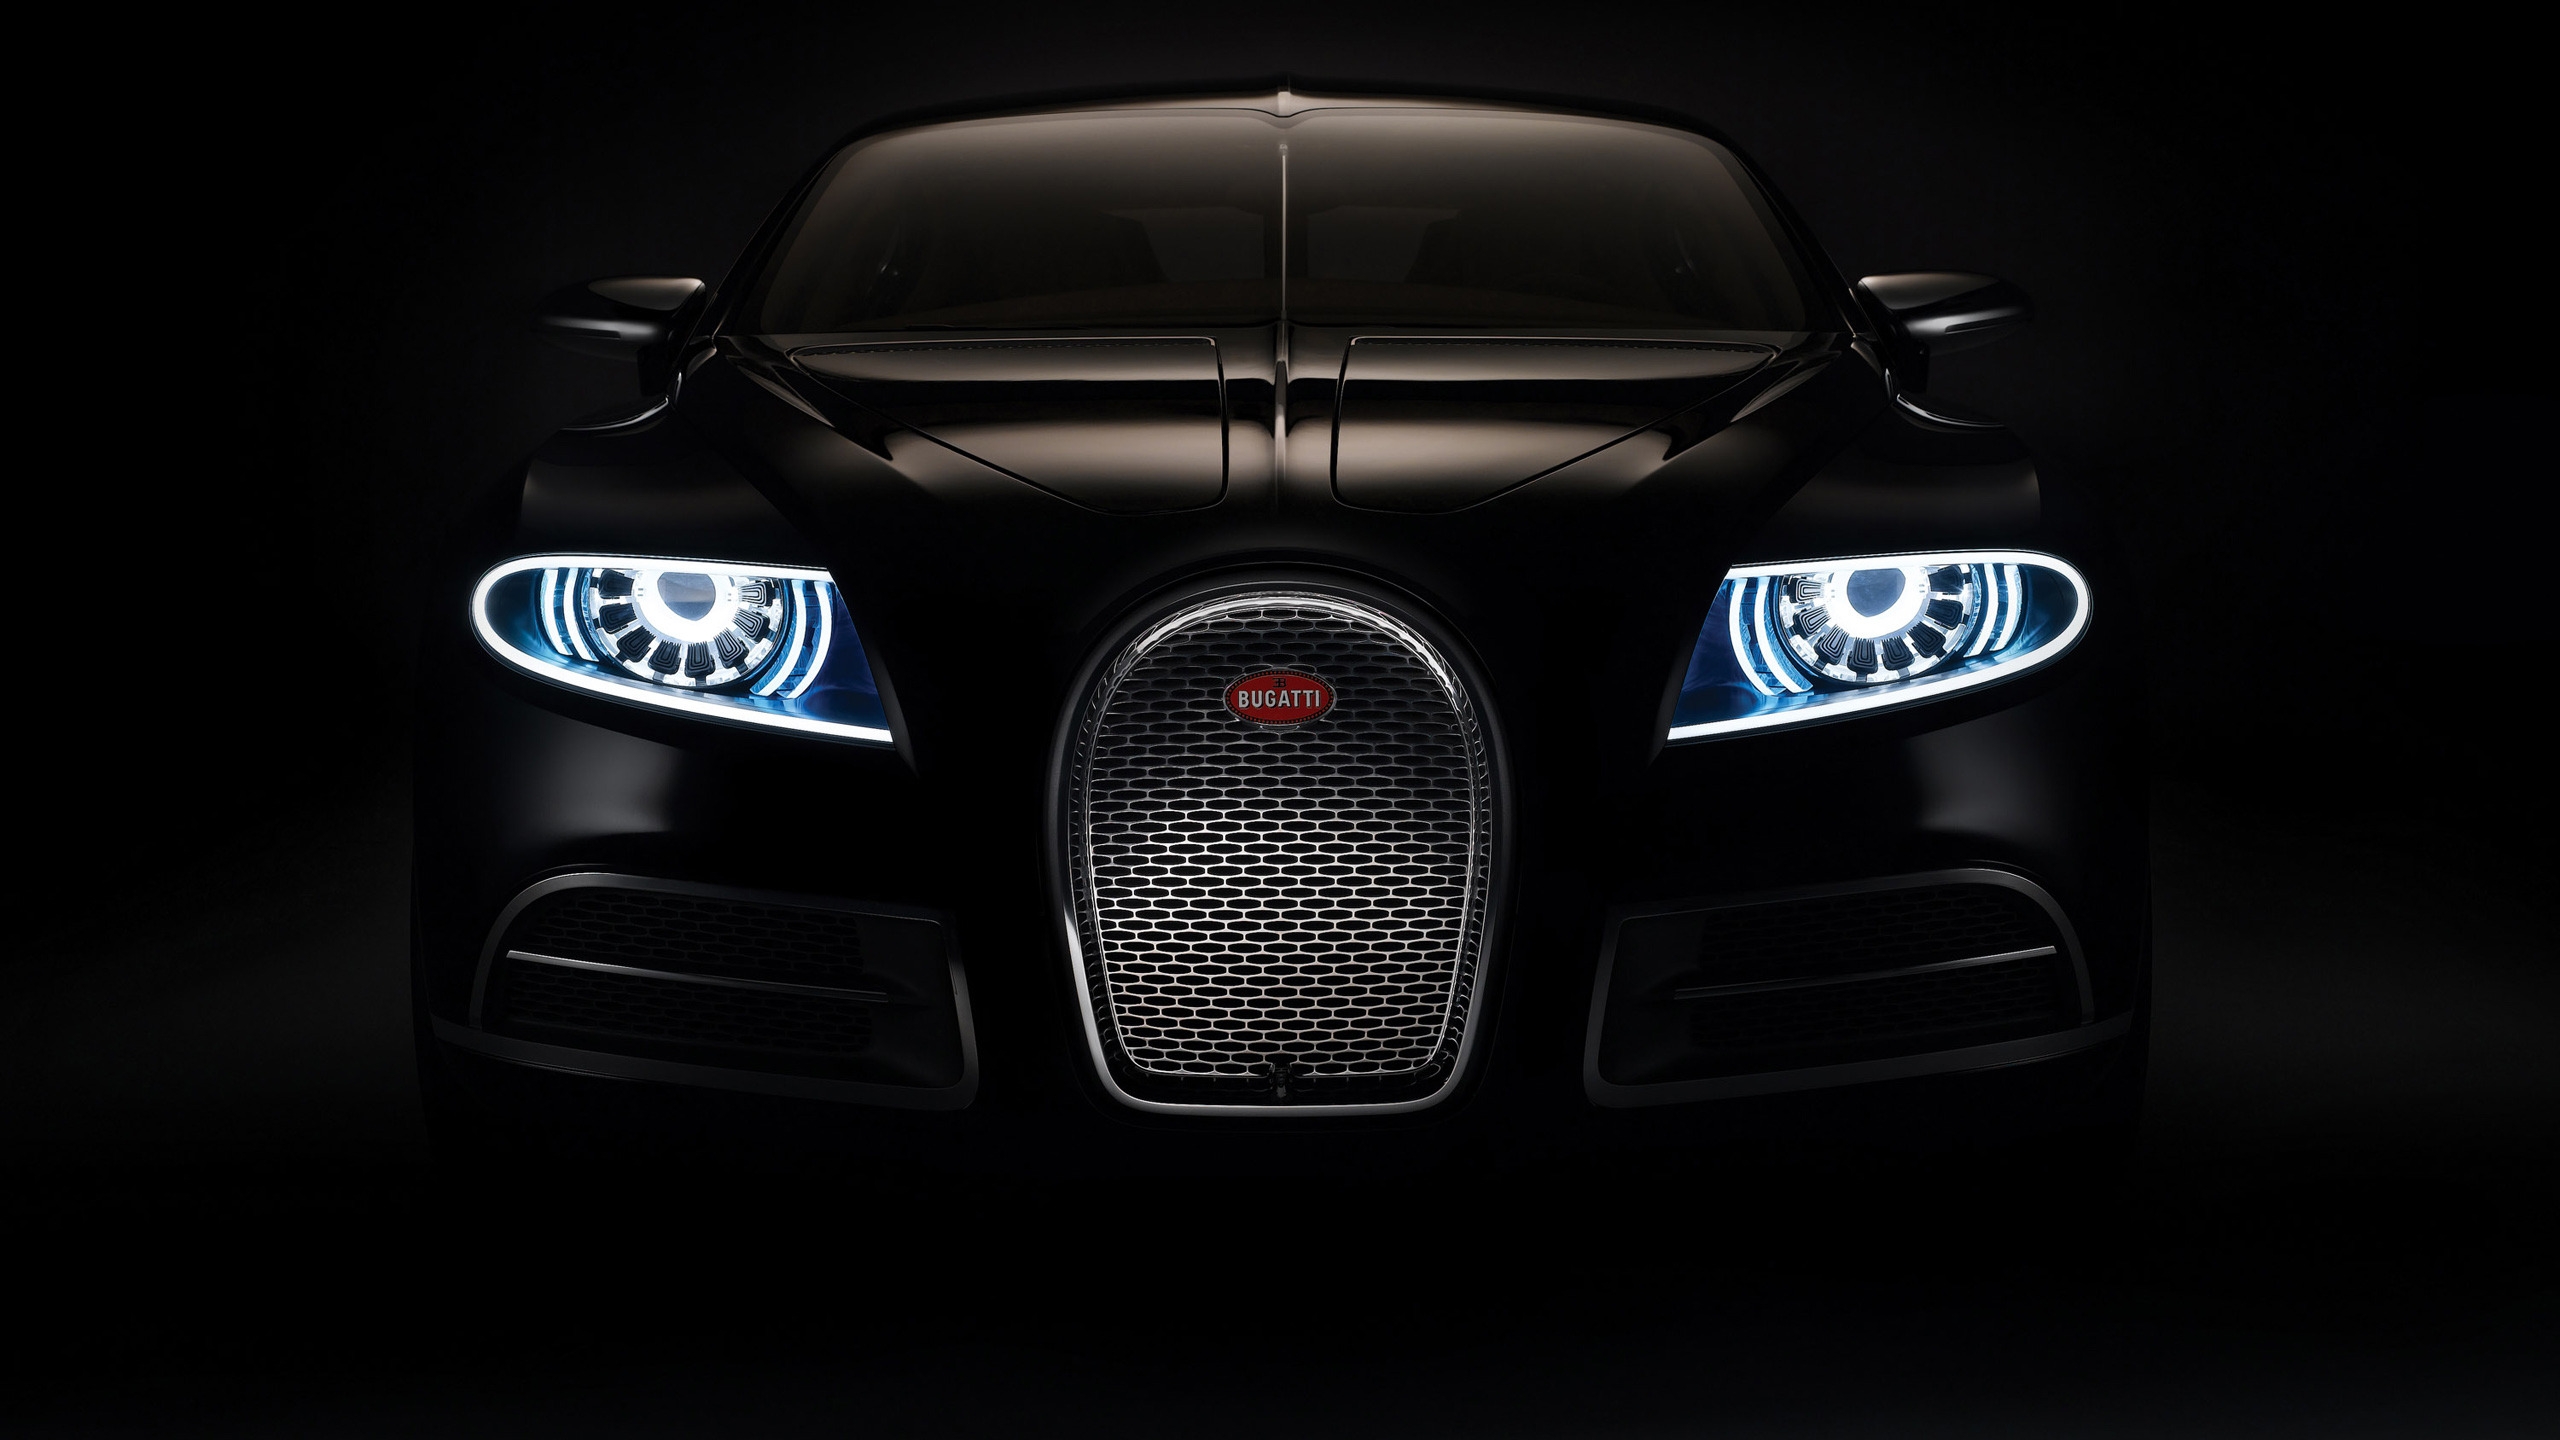 Bugatti 16C Galibier Front for 2560x1440 HDTV resolution